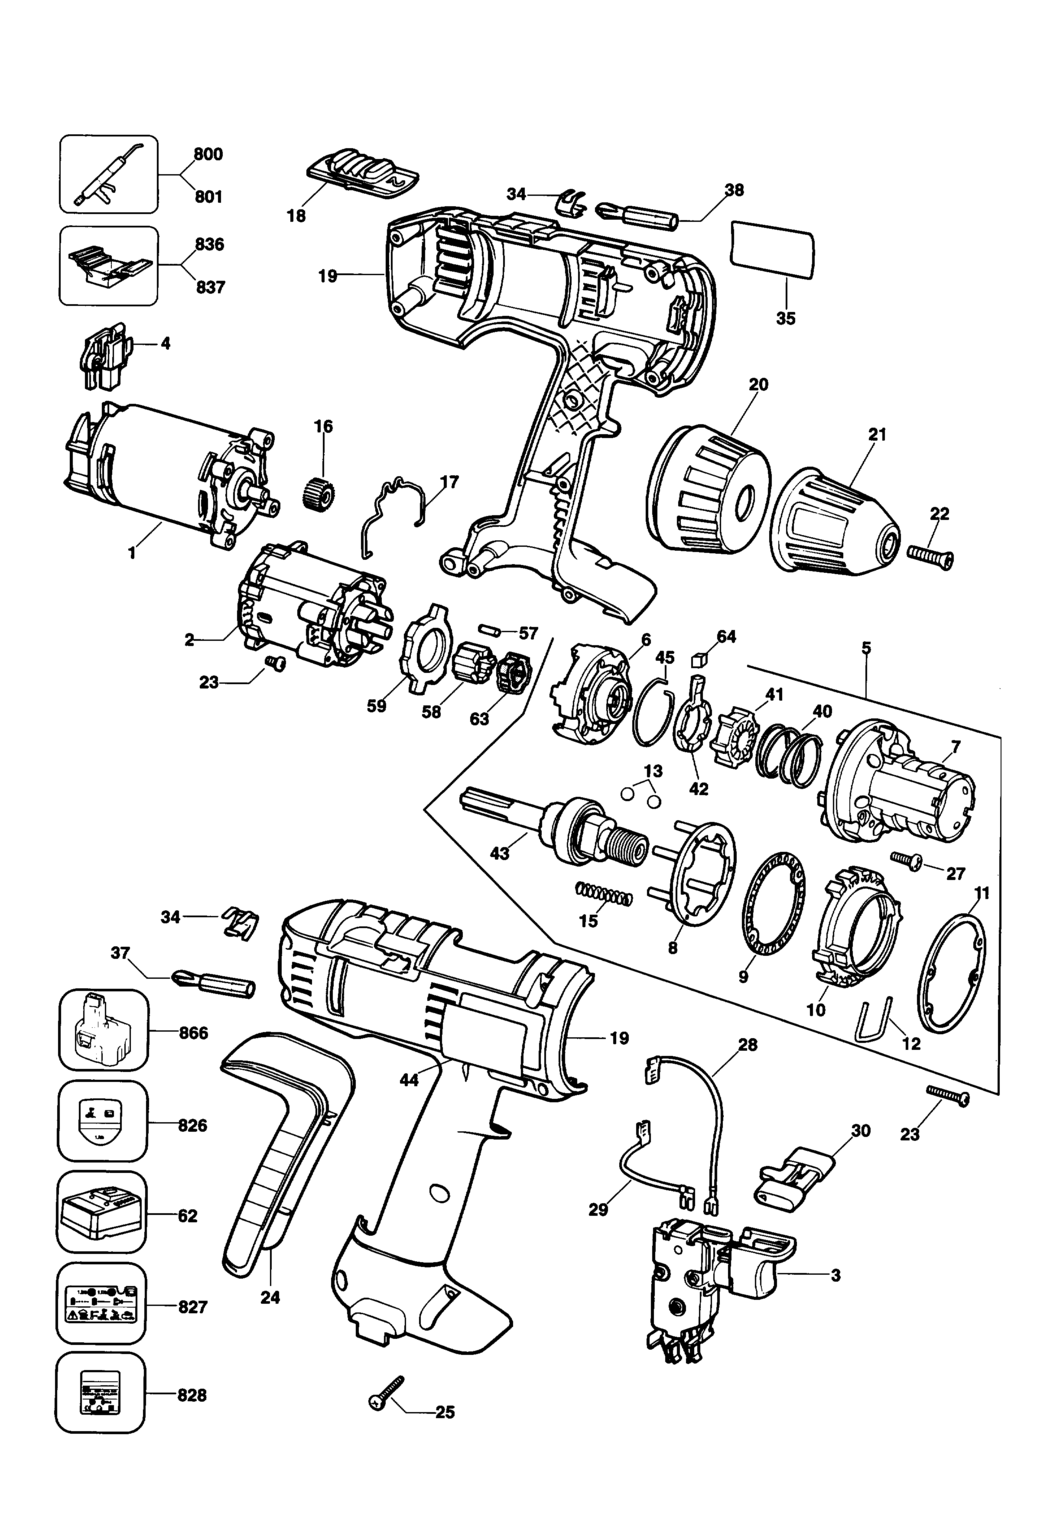 Dewalt DW914K Type 3 Cordless Drill Spare Parts